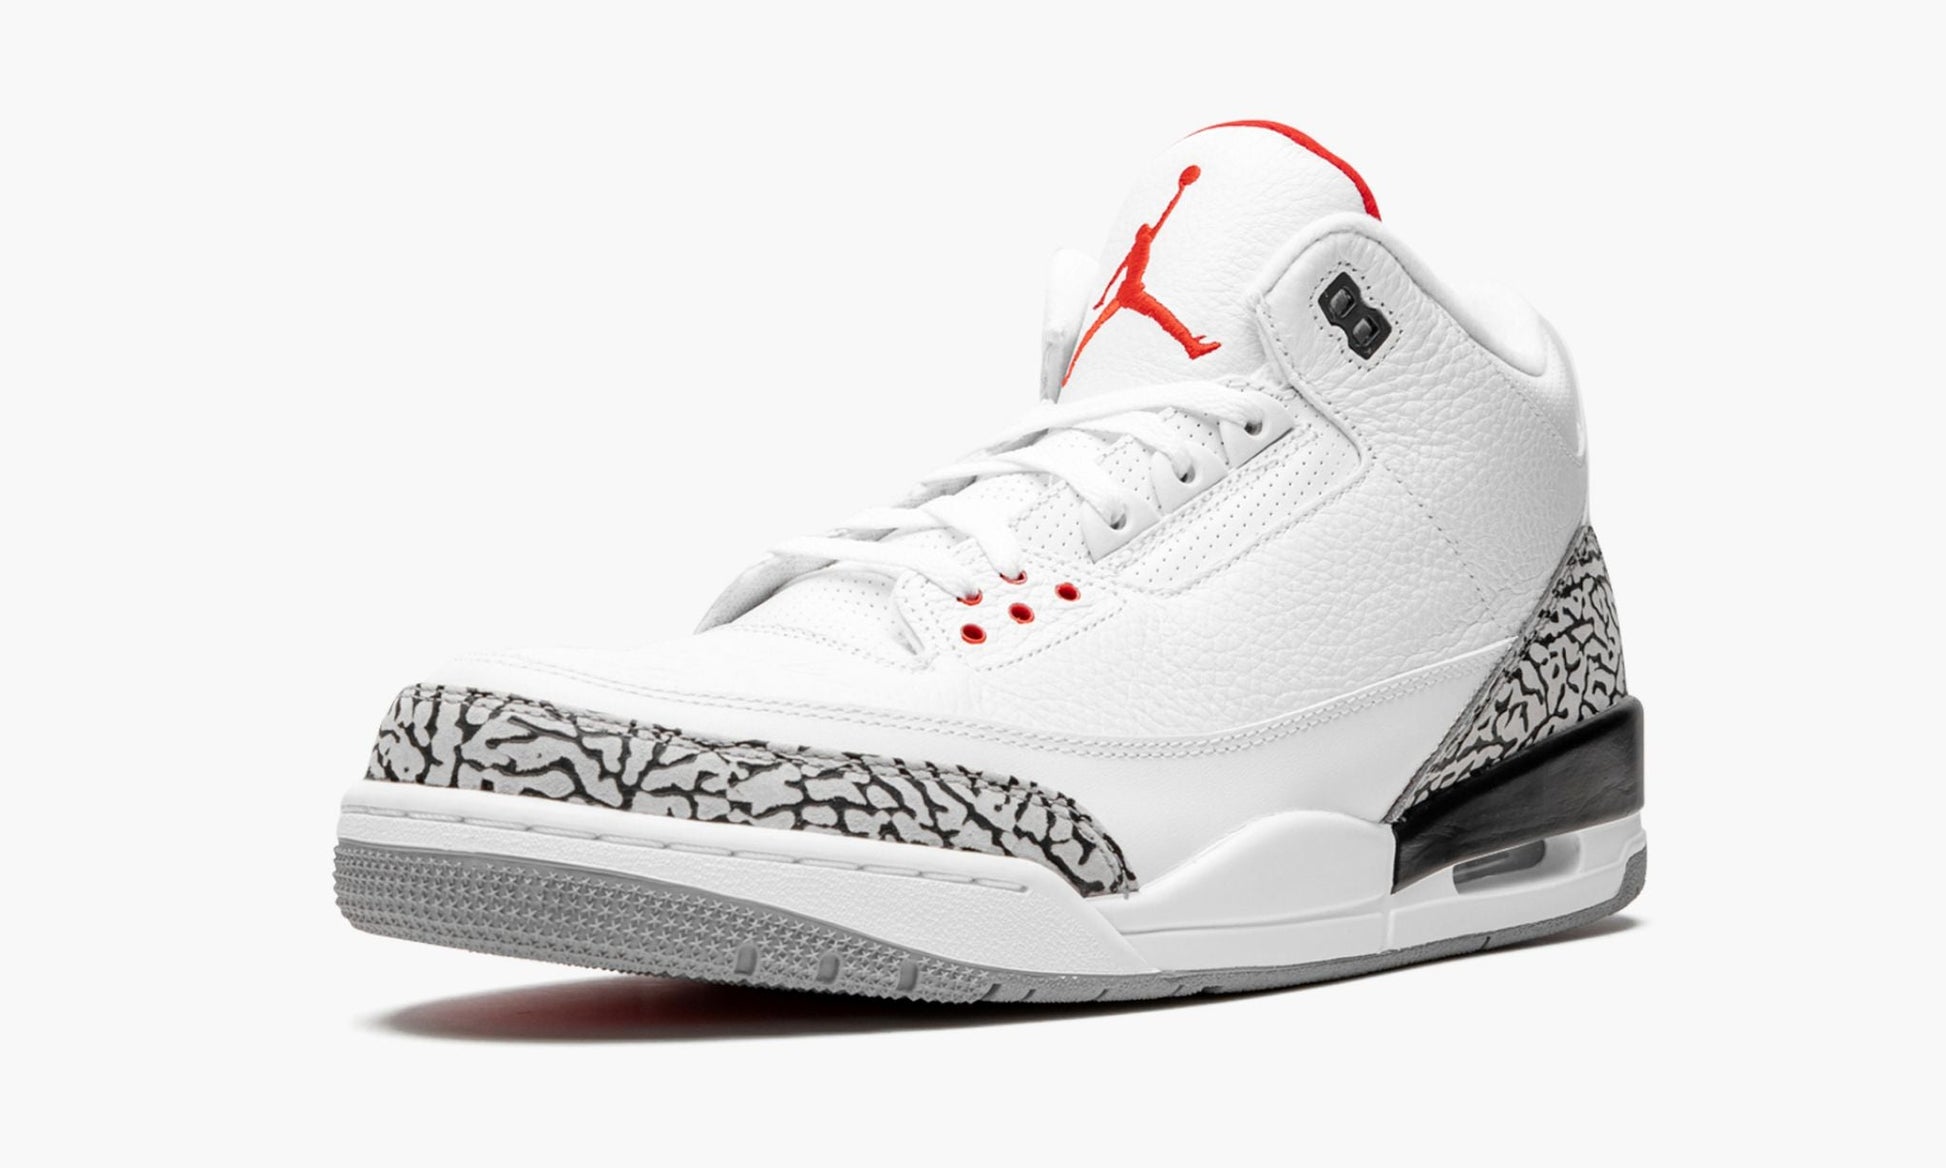 Air Jordan 3 Retro "White Cement '88 (2013)"